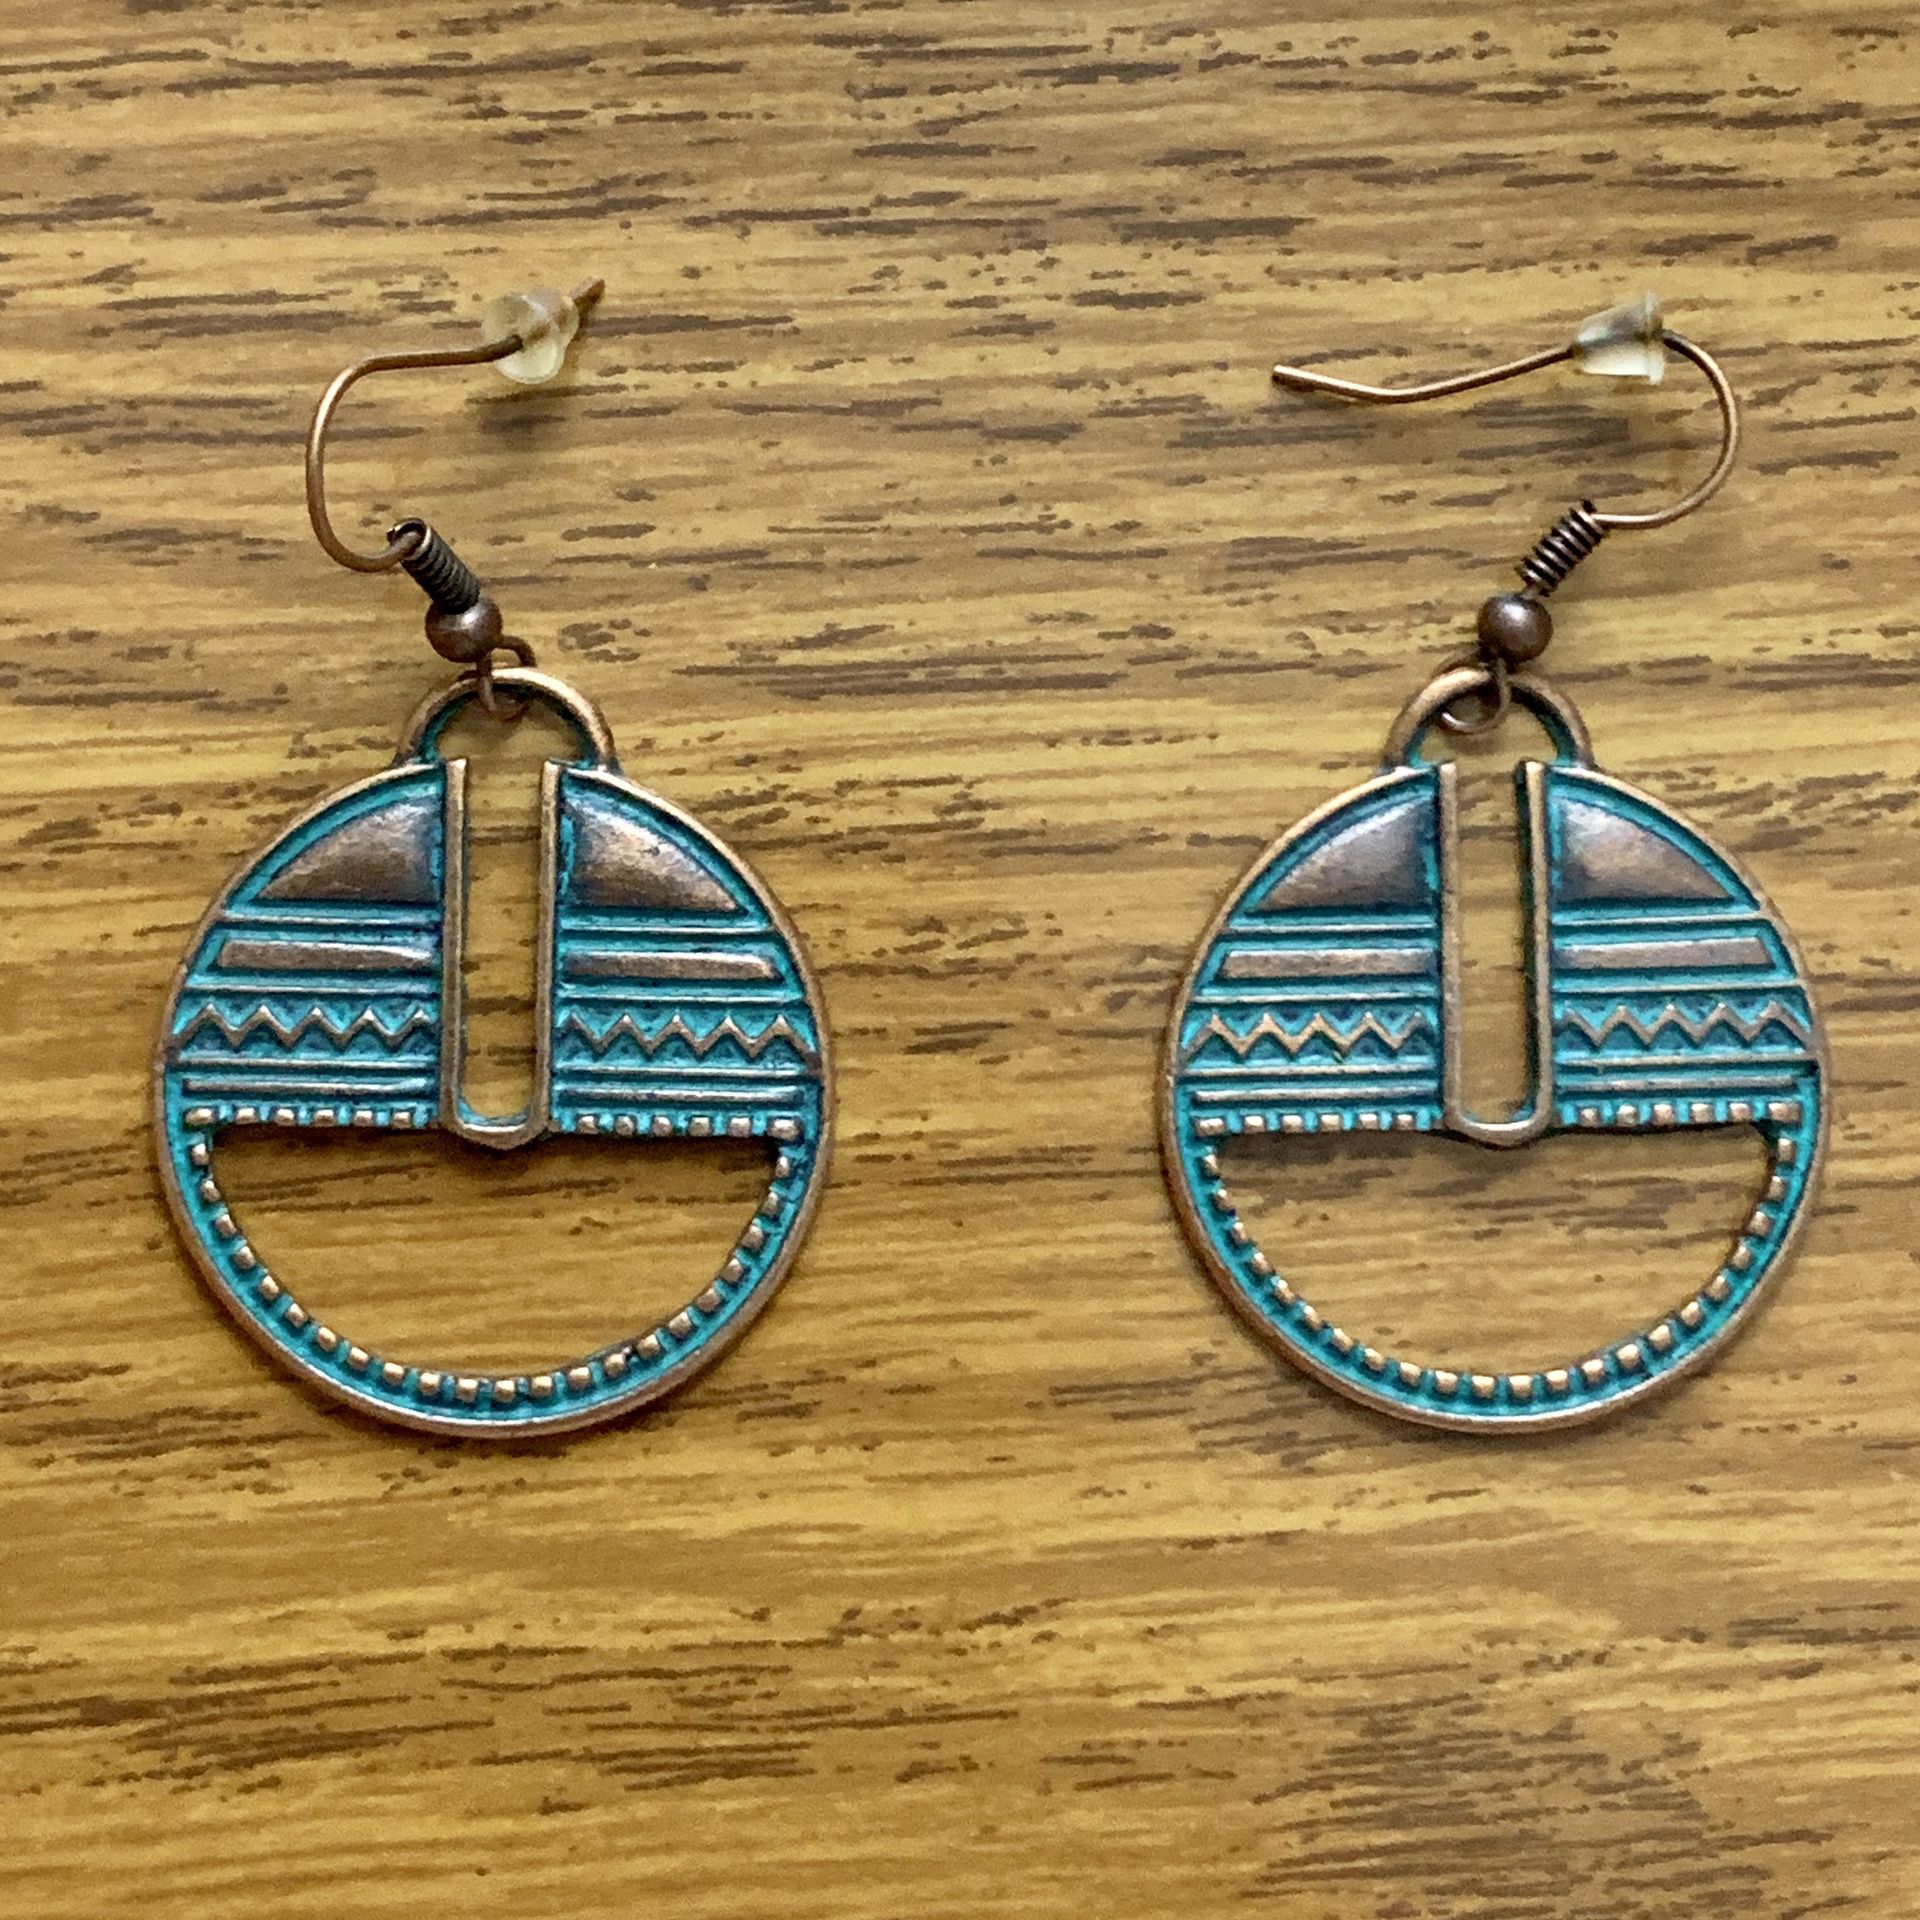 Vintage Turquoise Circular Dangle Earrings